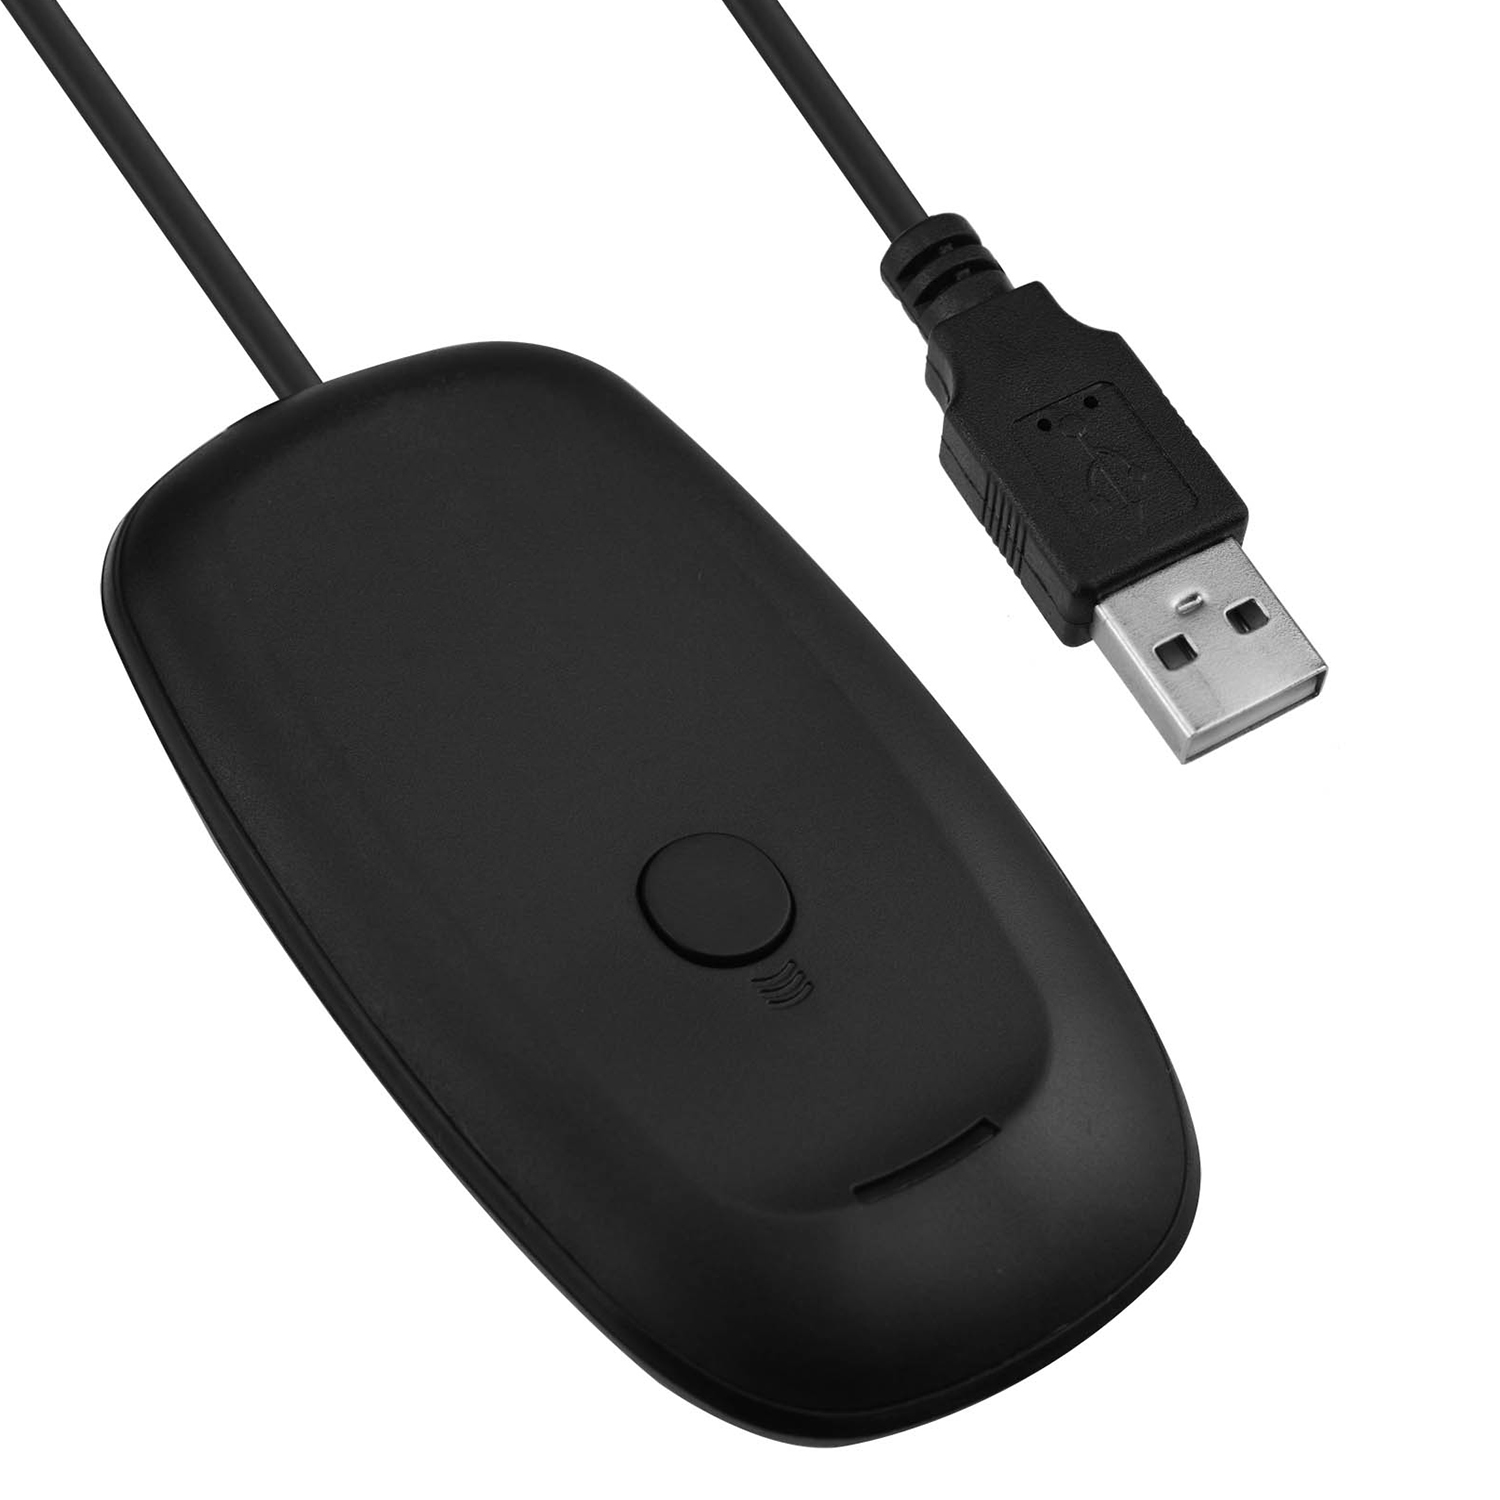 Mcbazel Wireless USB 2.0 Gaming Receiver for Microsoft Xbox 360 Pc Laptop Gaming – Black